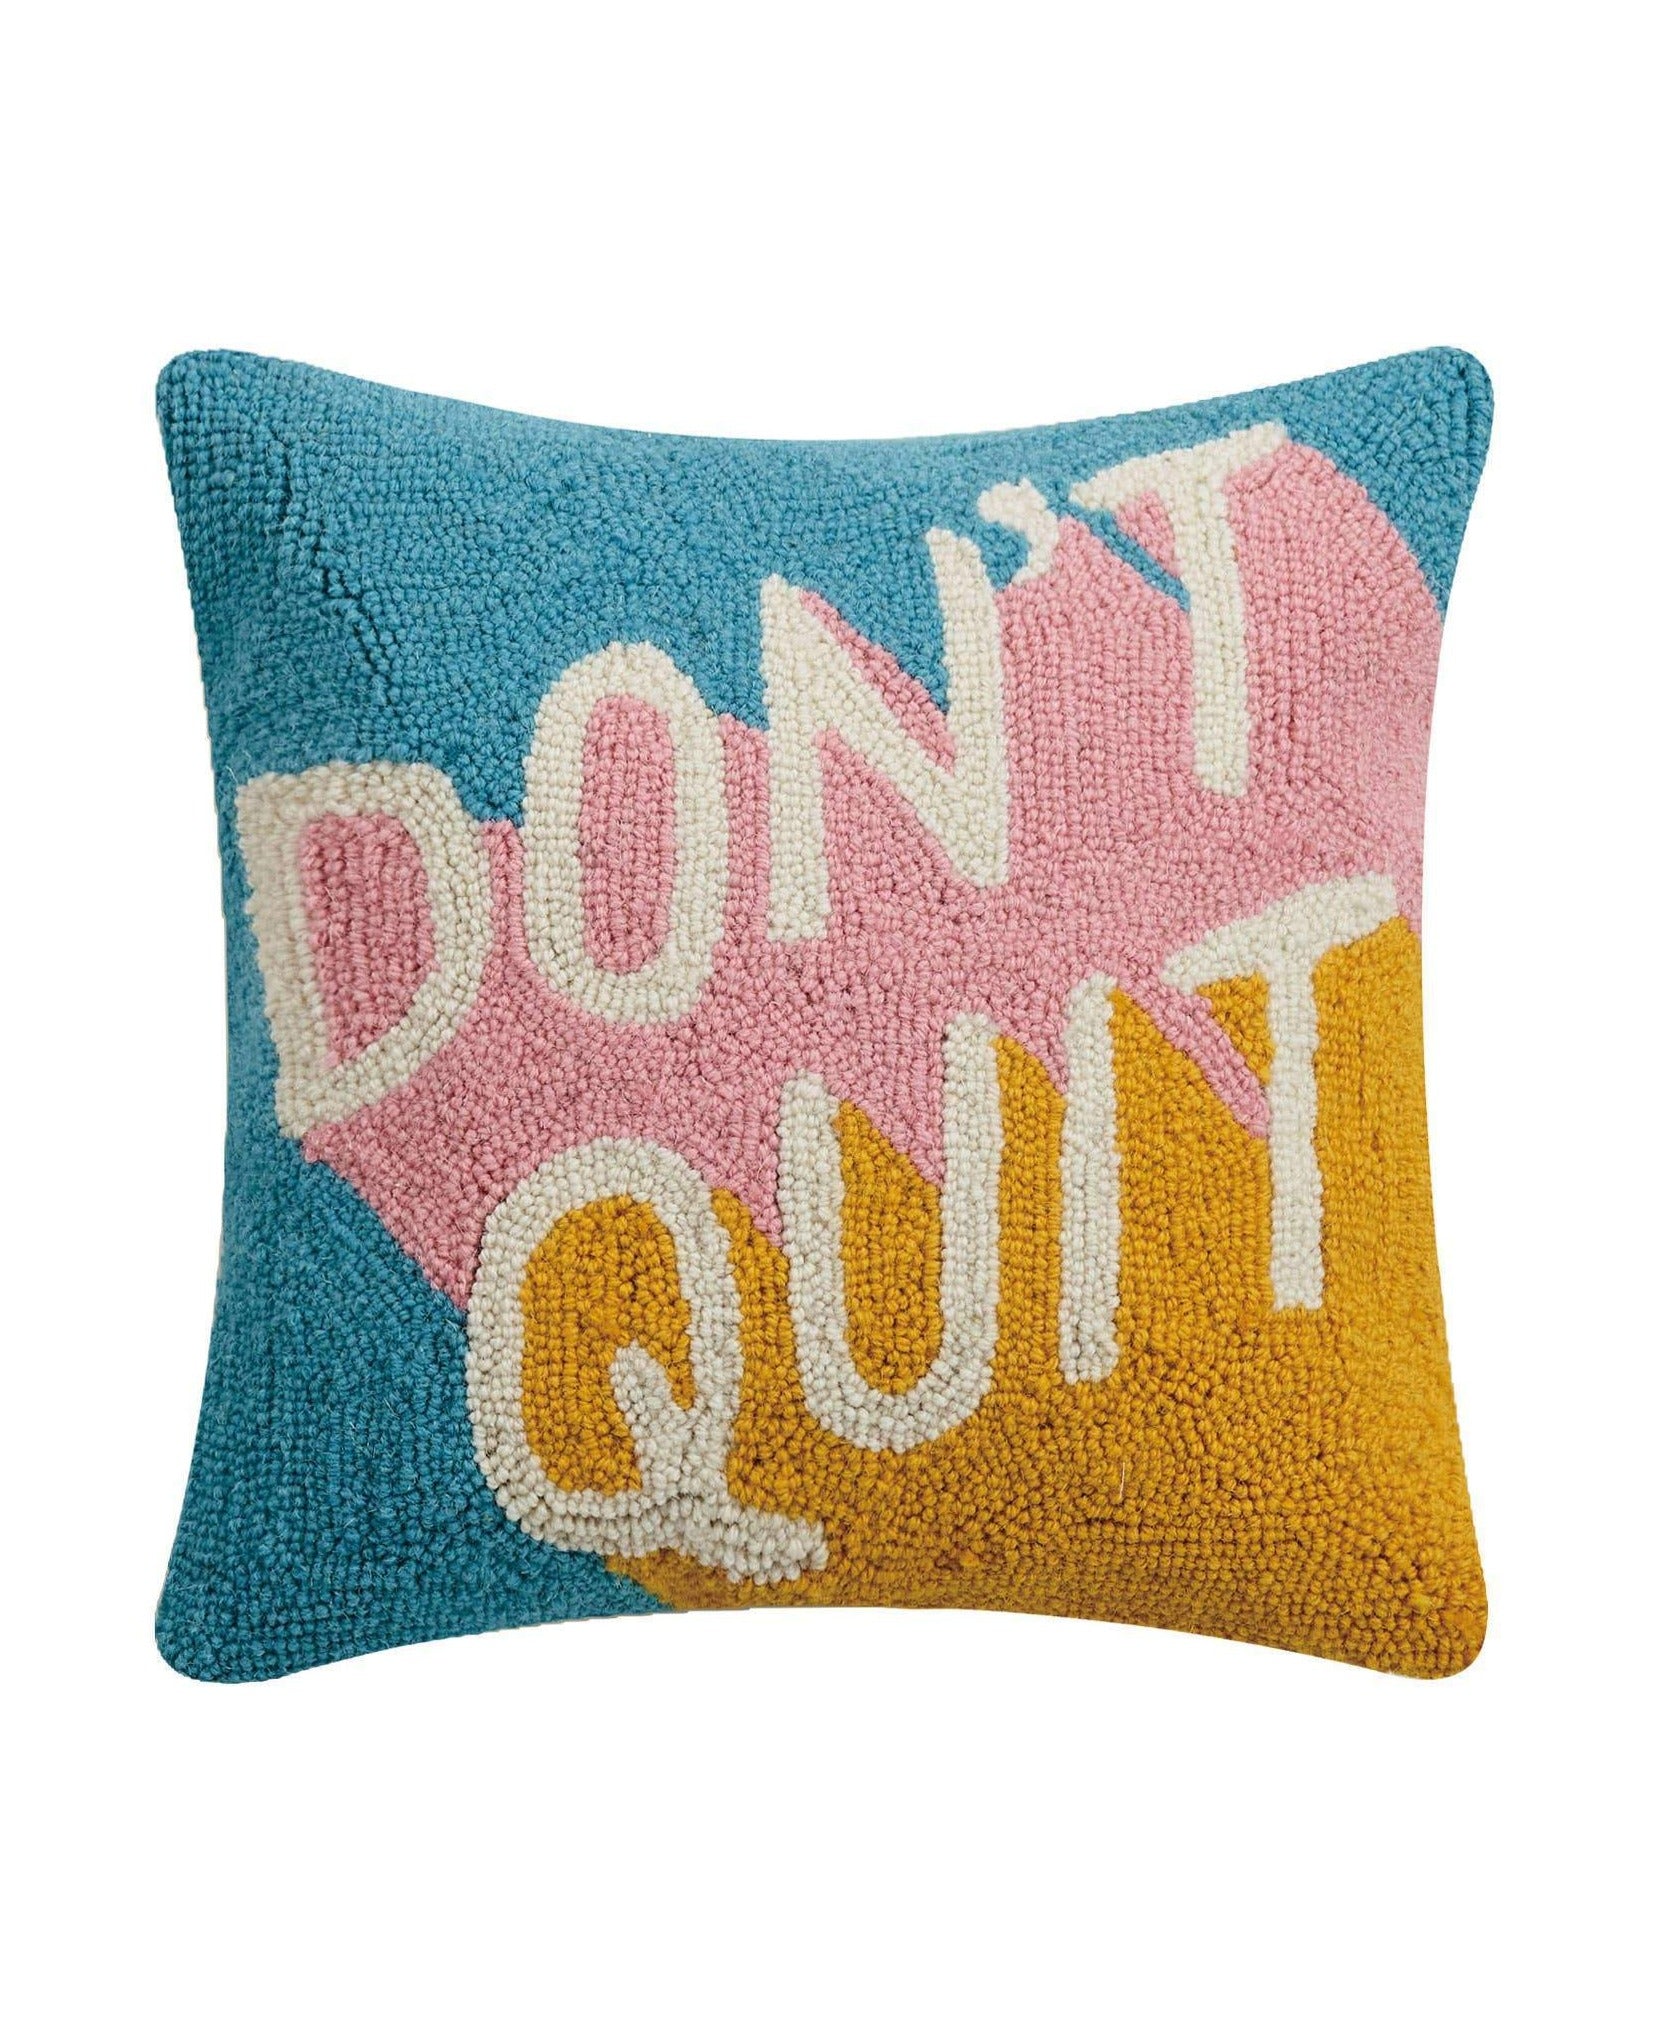 Don't Quit Knit Hook Pillow - FINAL SALE Home & Lifestyle